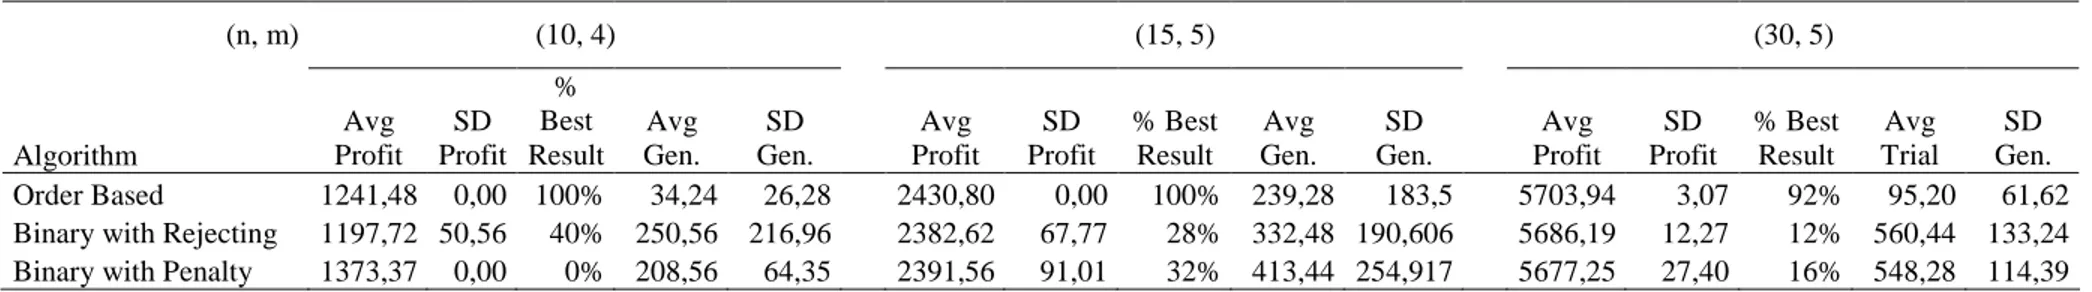 Table 4.6. Profit and Generation Analysis                                              (n, m)  (10, 4)  (15, 5)  (30, 5)  Algorithm  Avg  Profit  SD  Profit  %  Best  Result  Avg  Gen